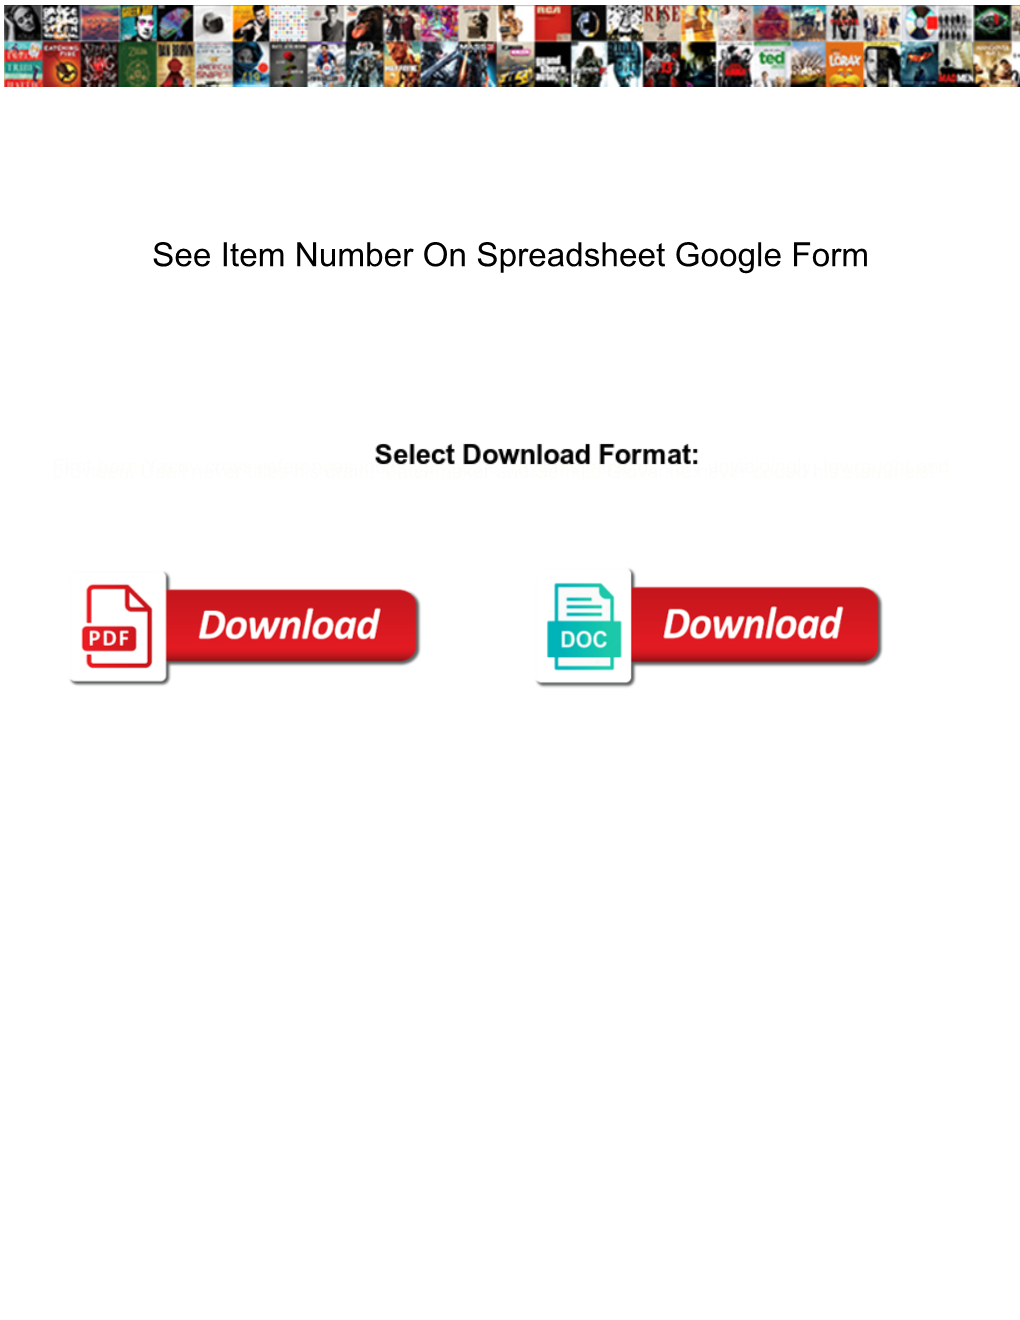 See Item Number on Spreadsheet Google Form